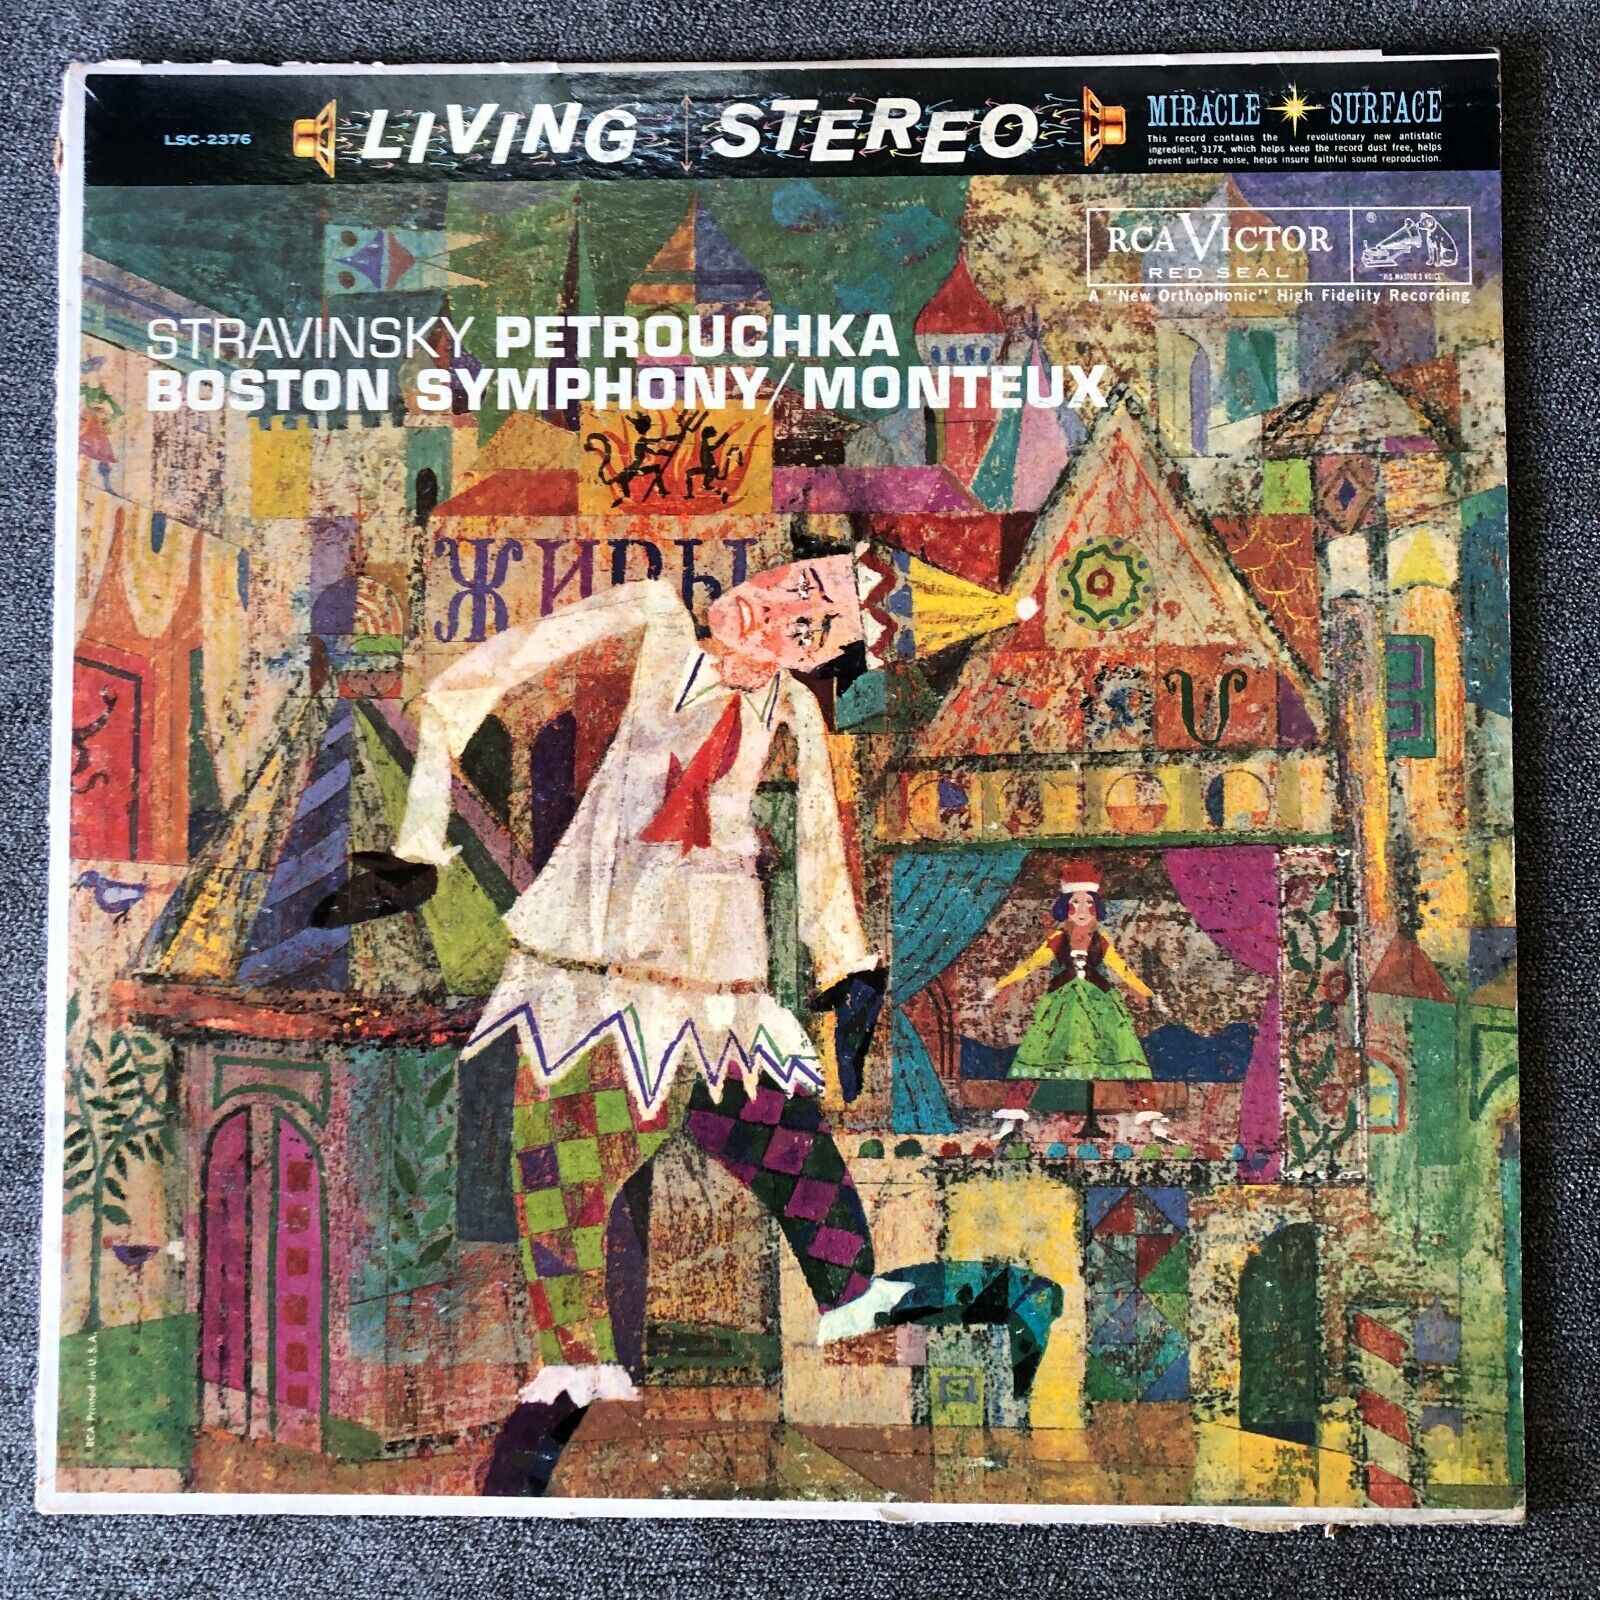  STRAVINSKY Petrouchka MONTEUX LP Living Stereo LSC 2376 Vinyl G